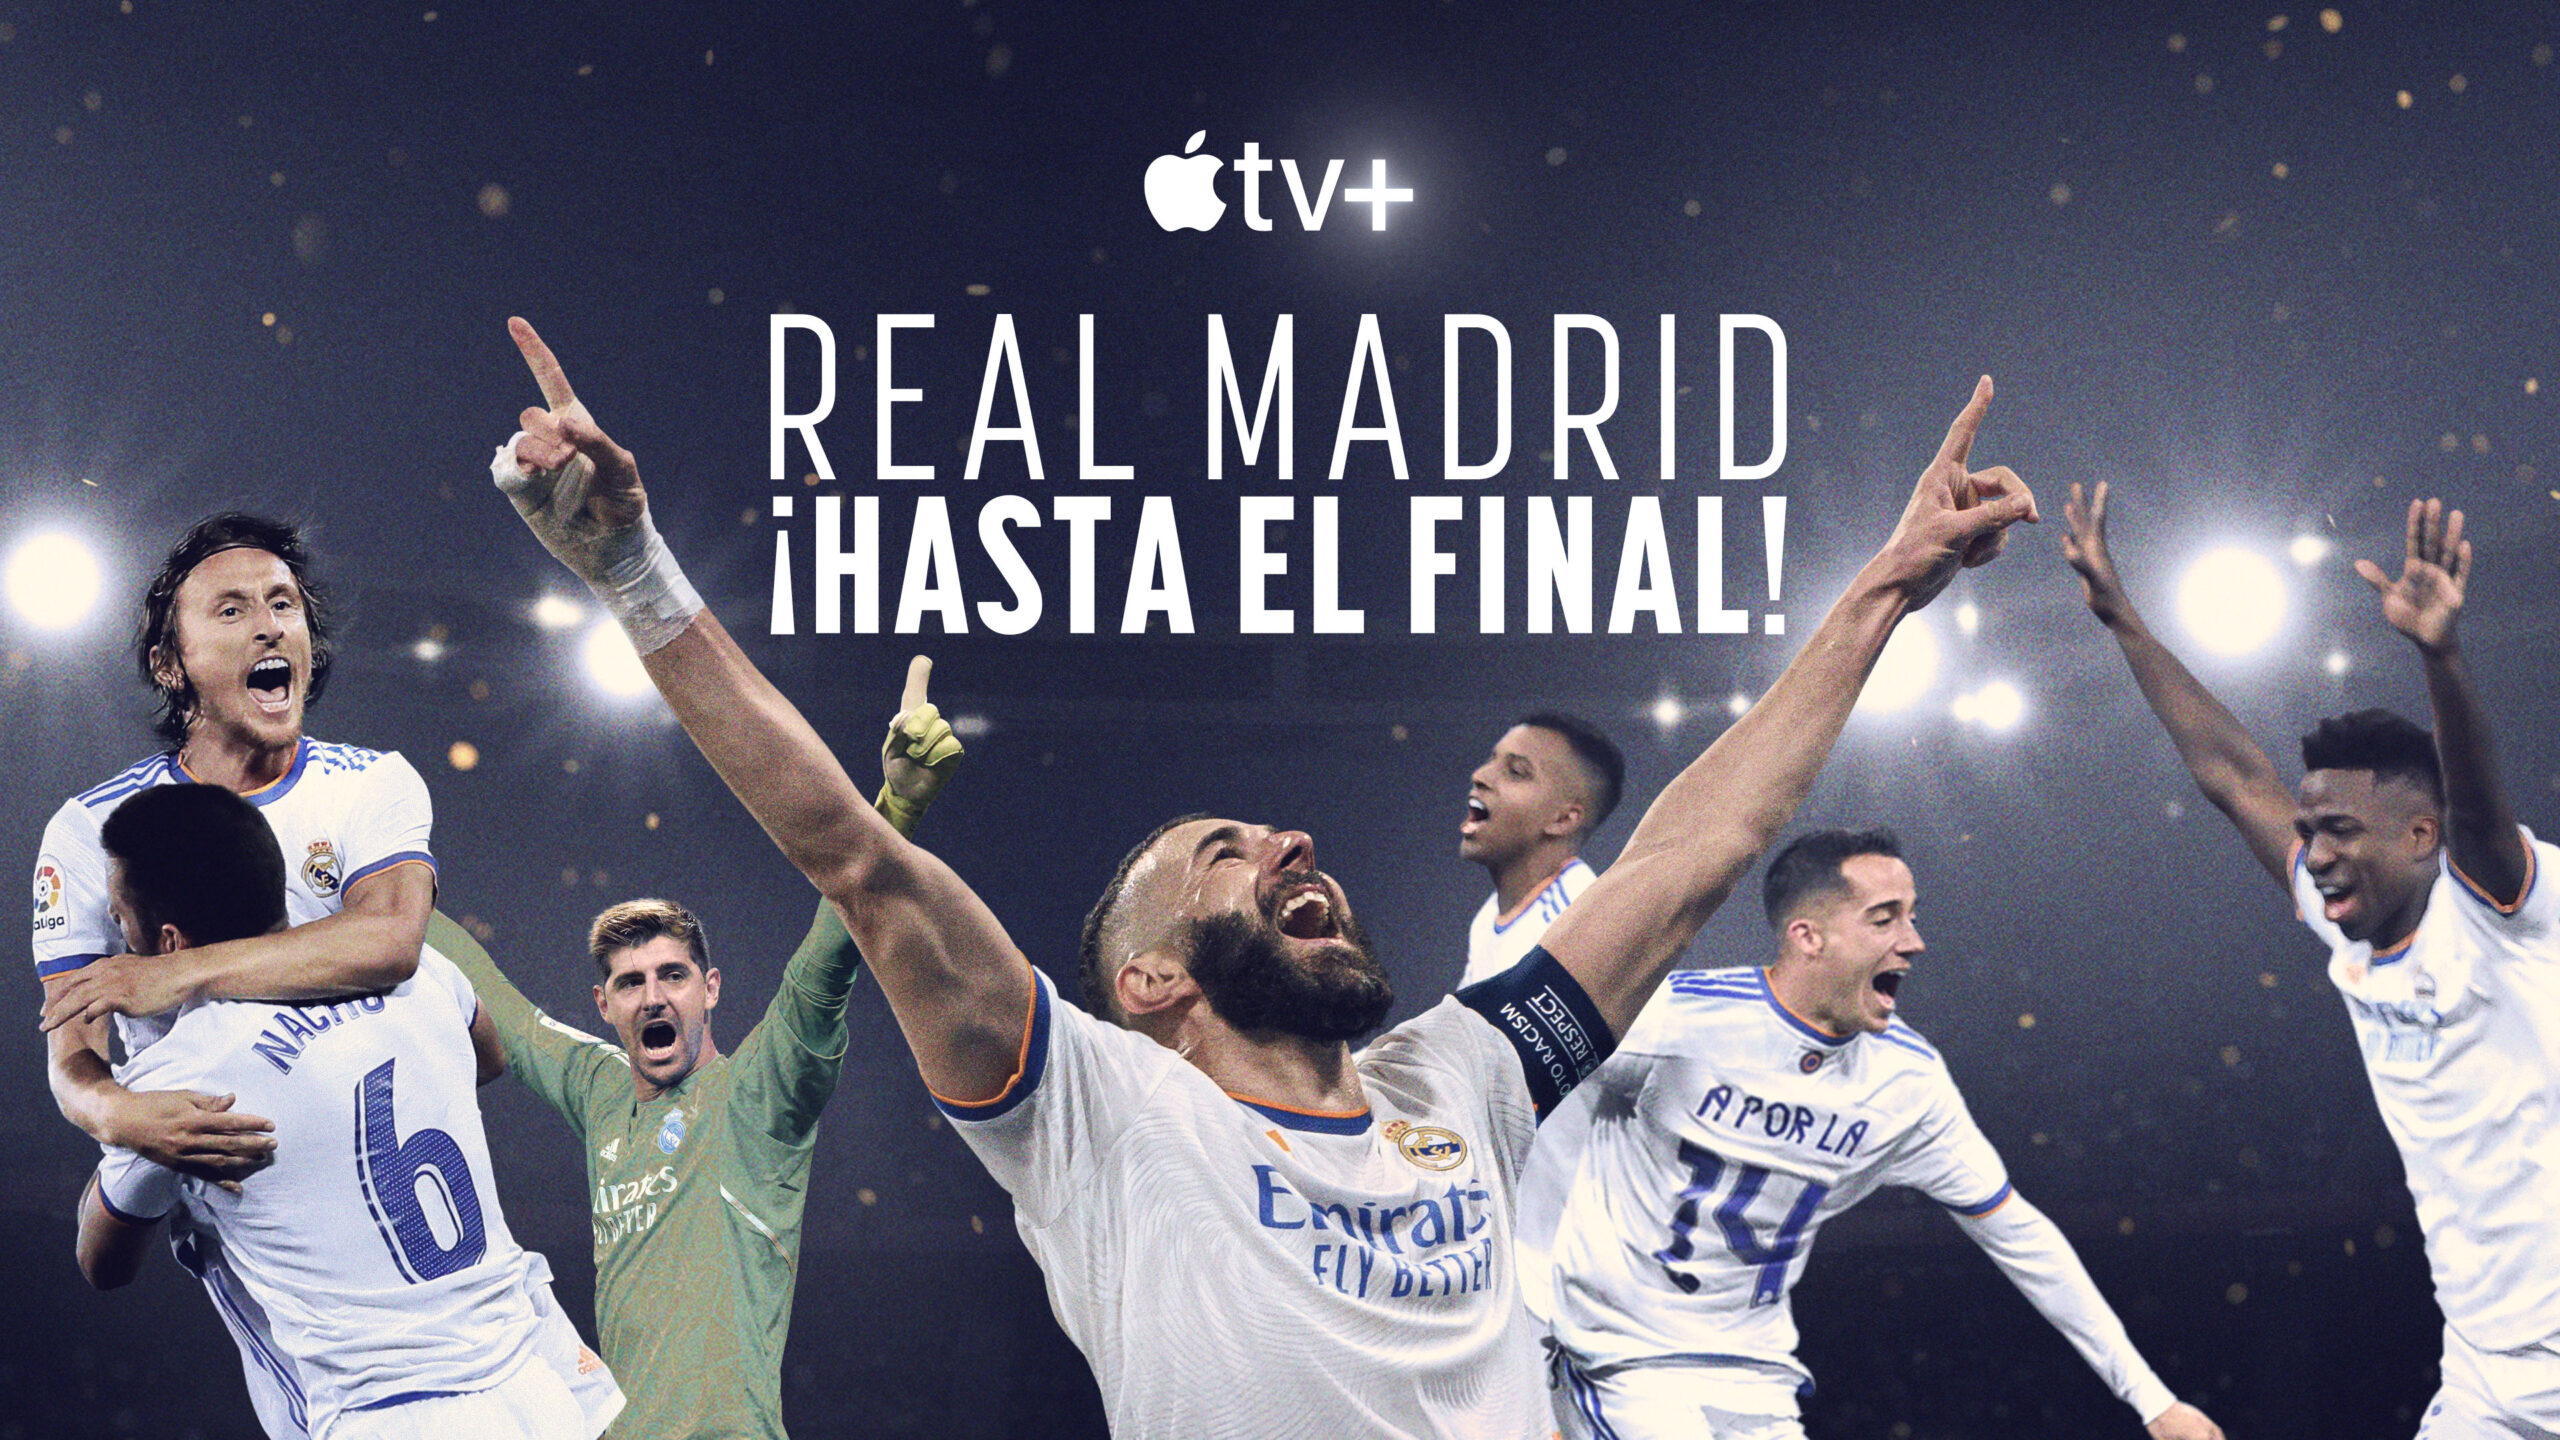 Real Madrid - ¡Hasta el final! - Poster [credit: courtesy of Apple]